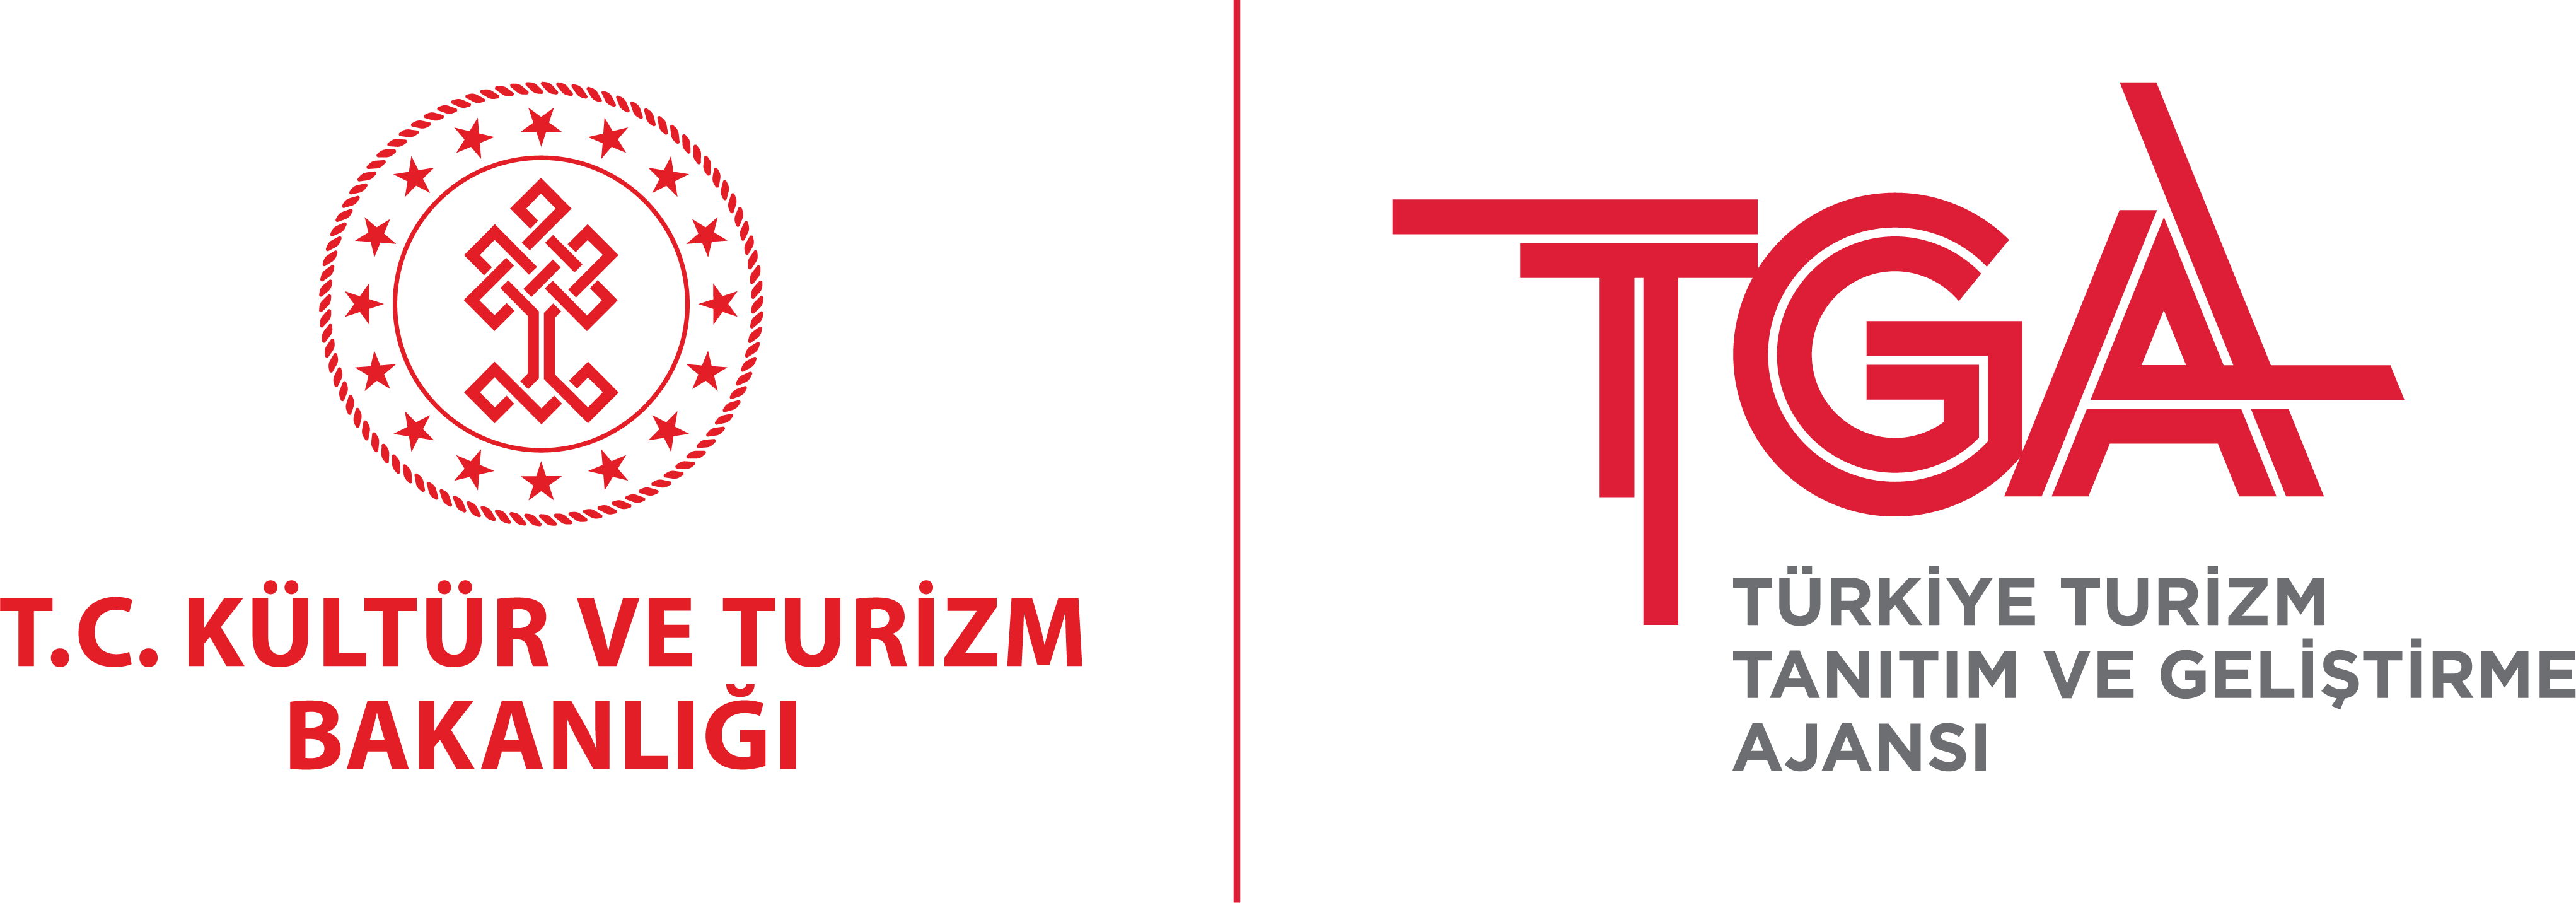 KTB - TGA logo